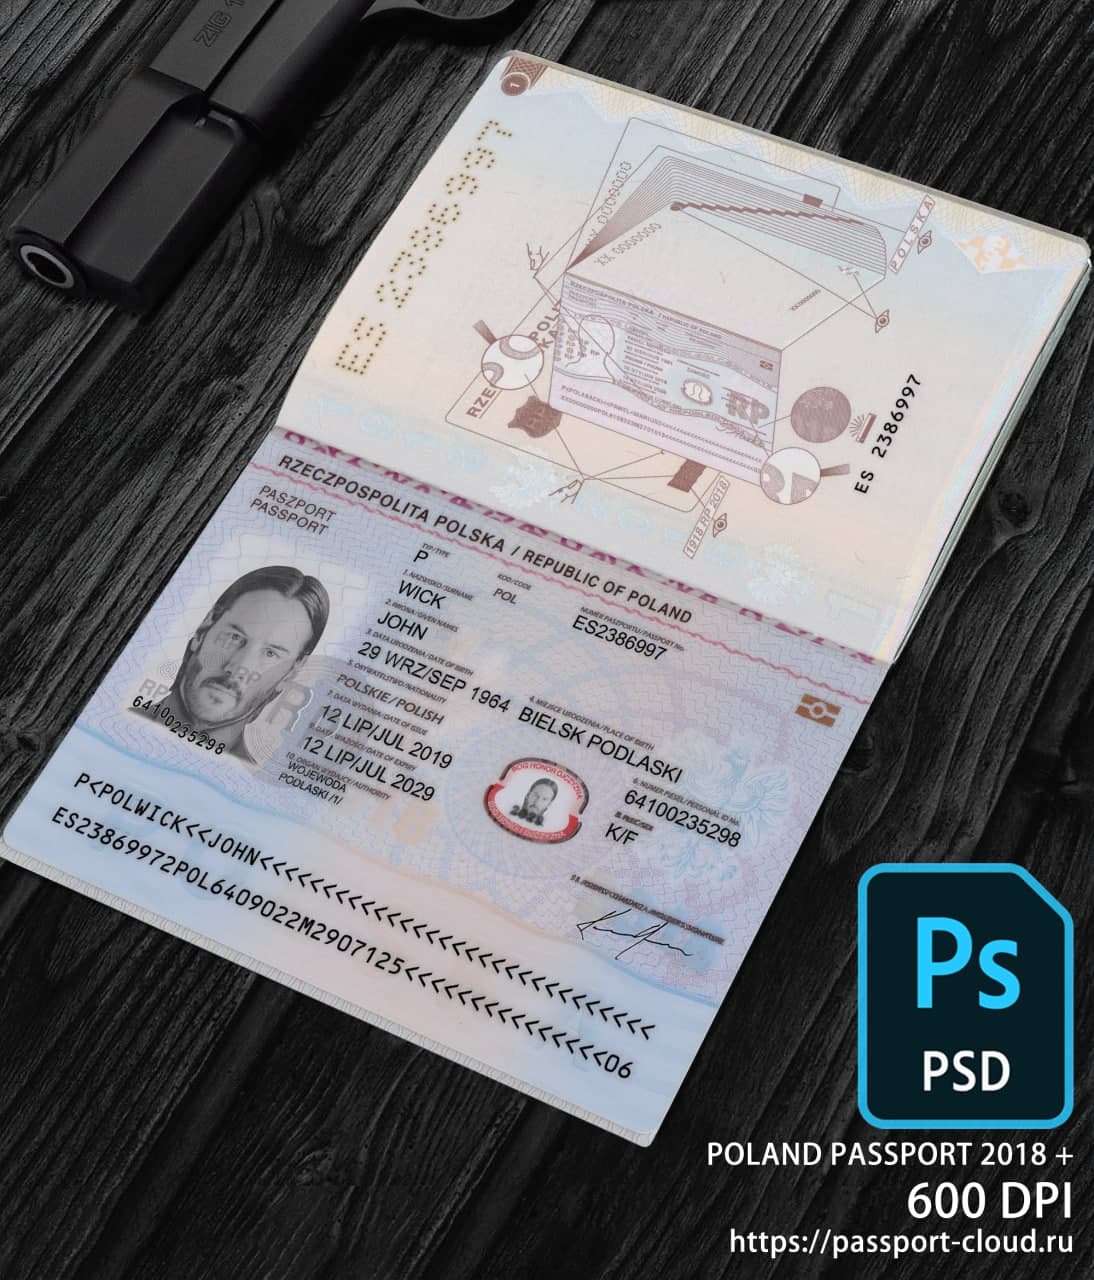 Poland Passport 2018+ PSD1